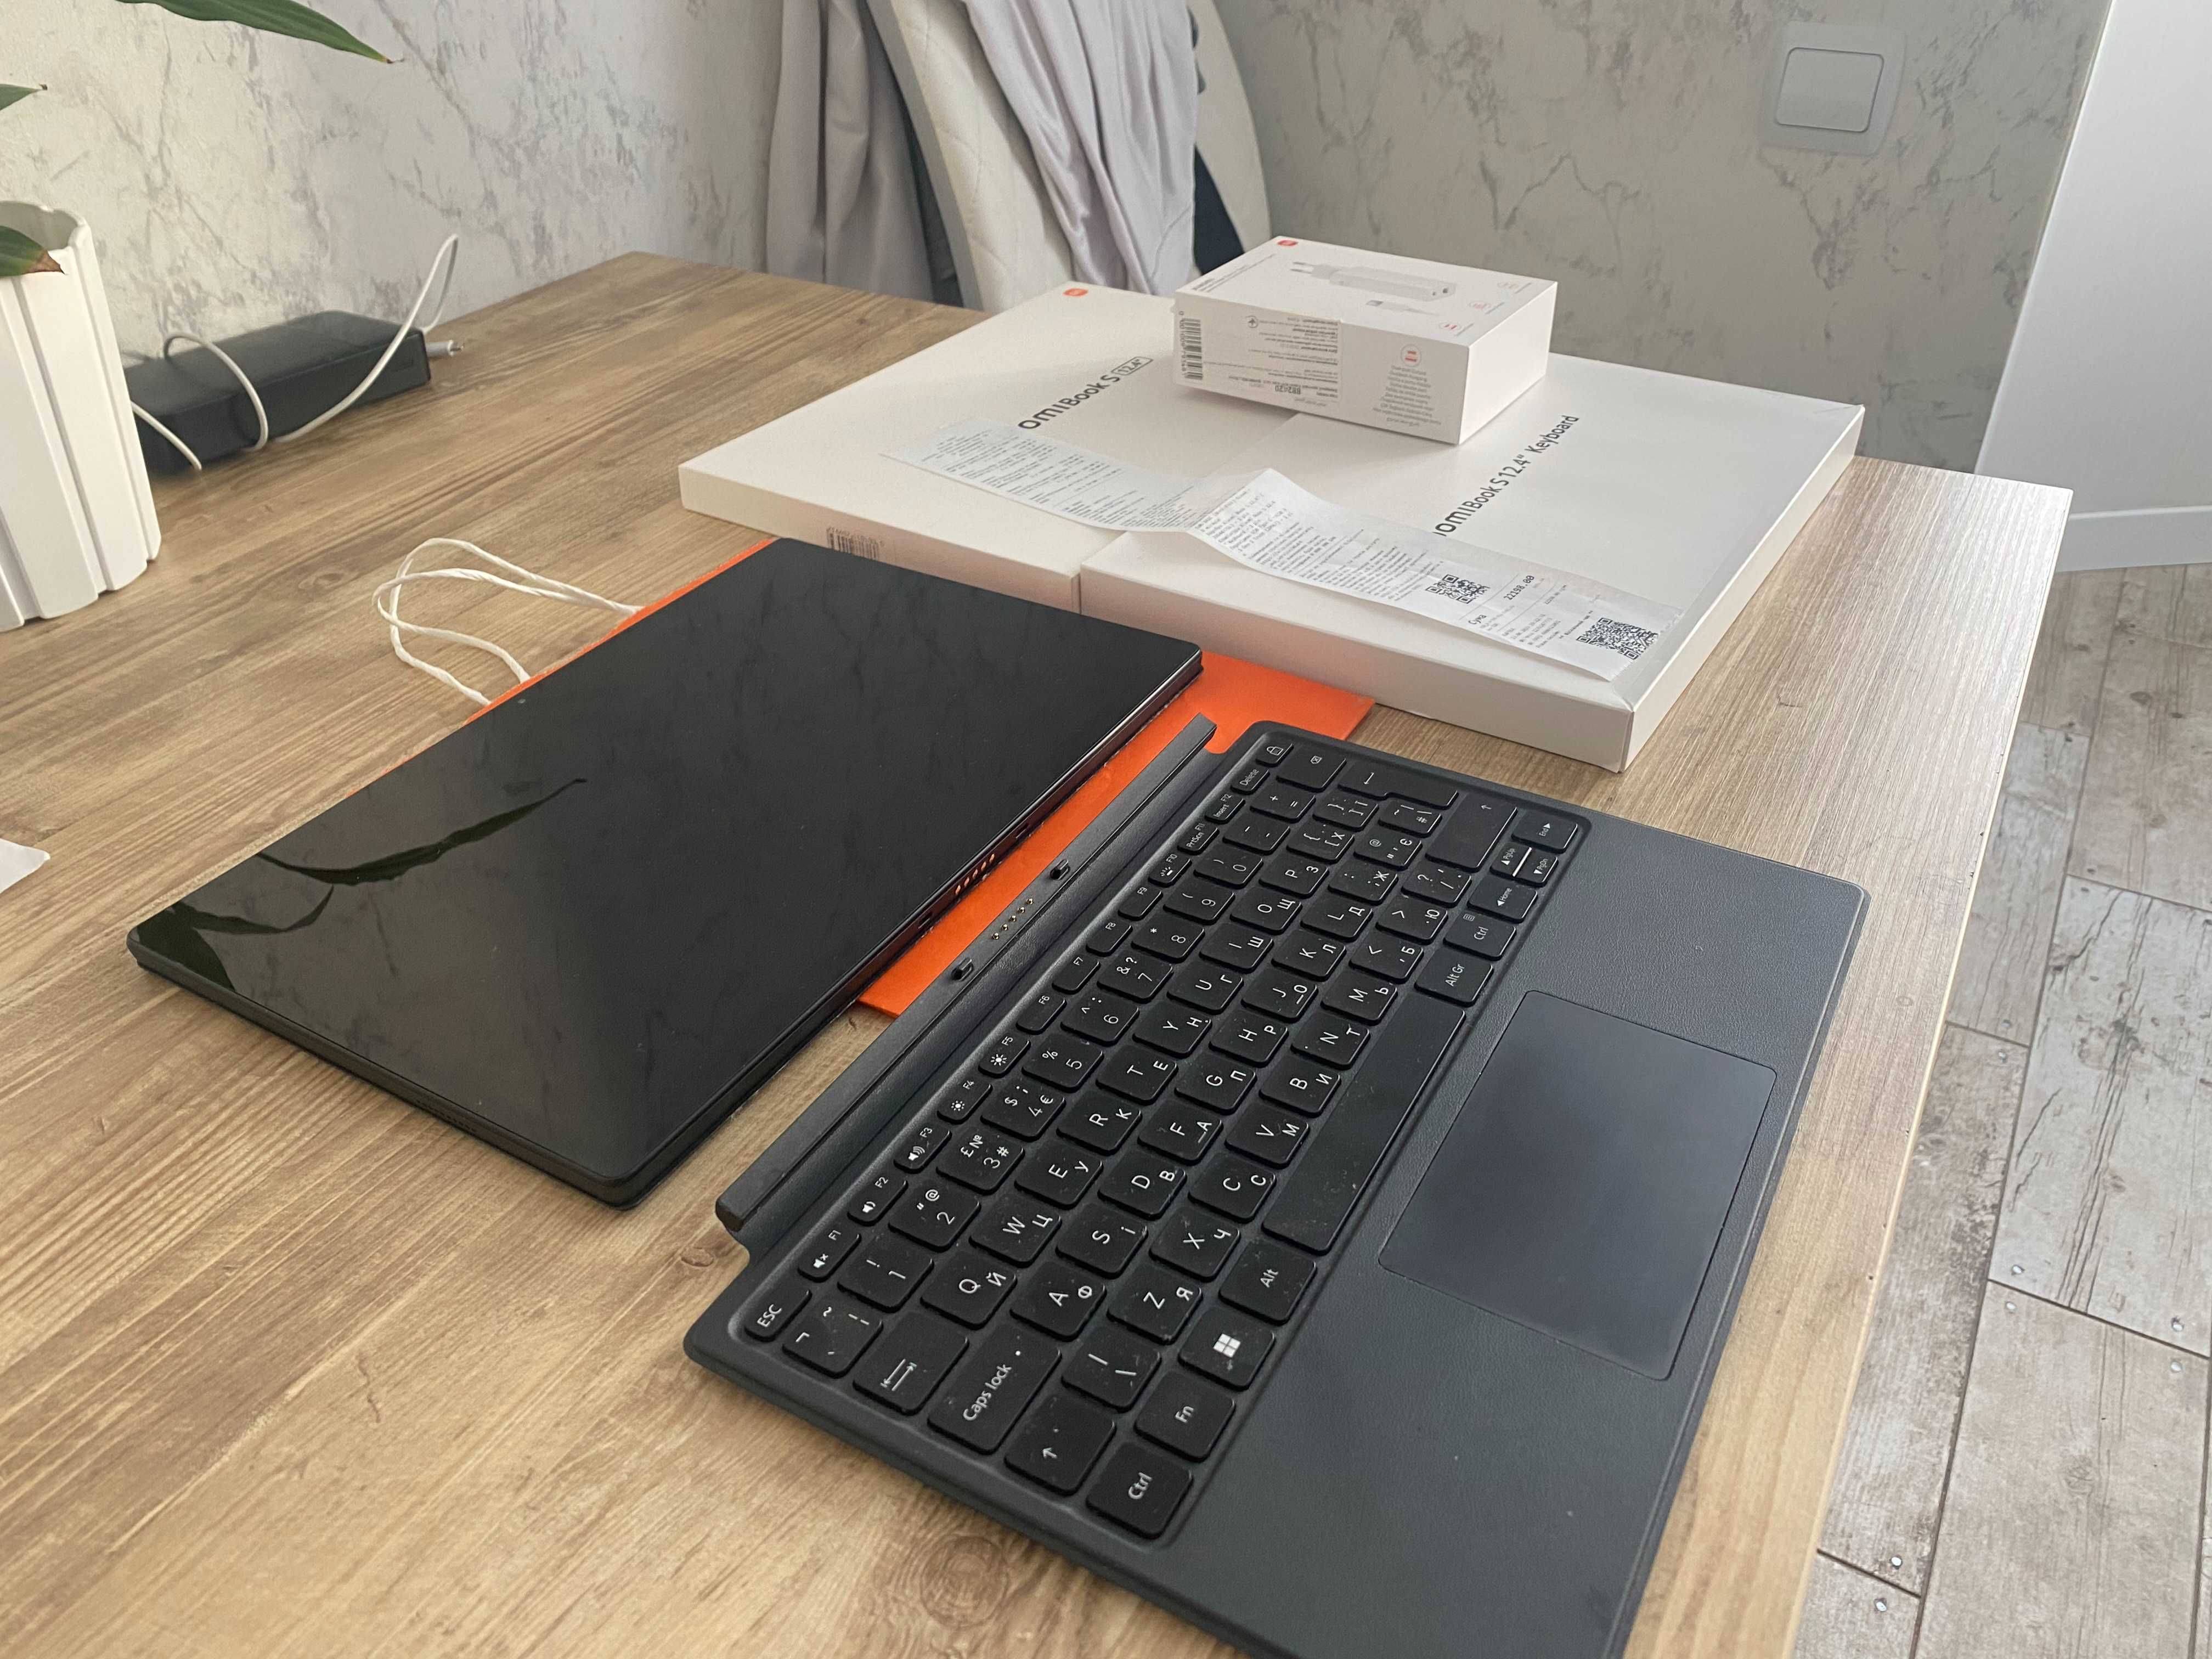 Ноутбук Xiaomi Book S 12.4" (JYU4477GL) + чехол-клавиатура + зарядное.